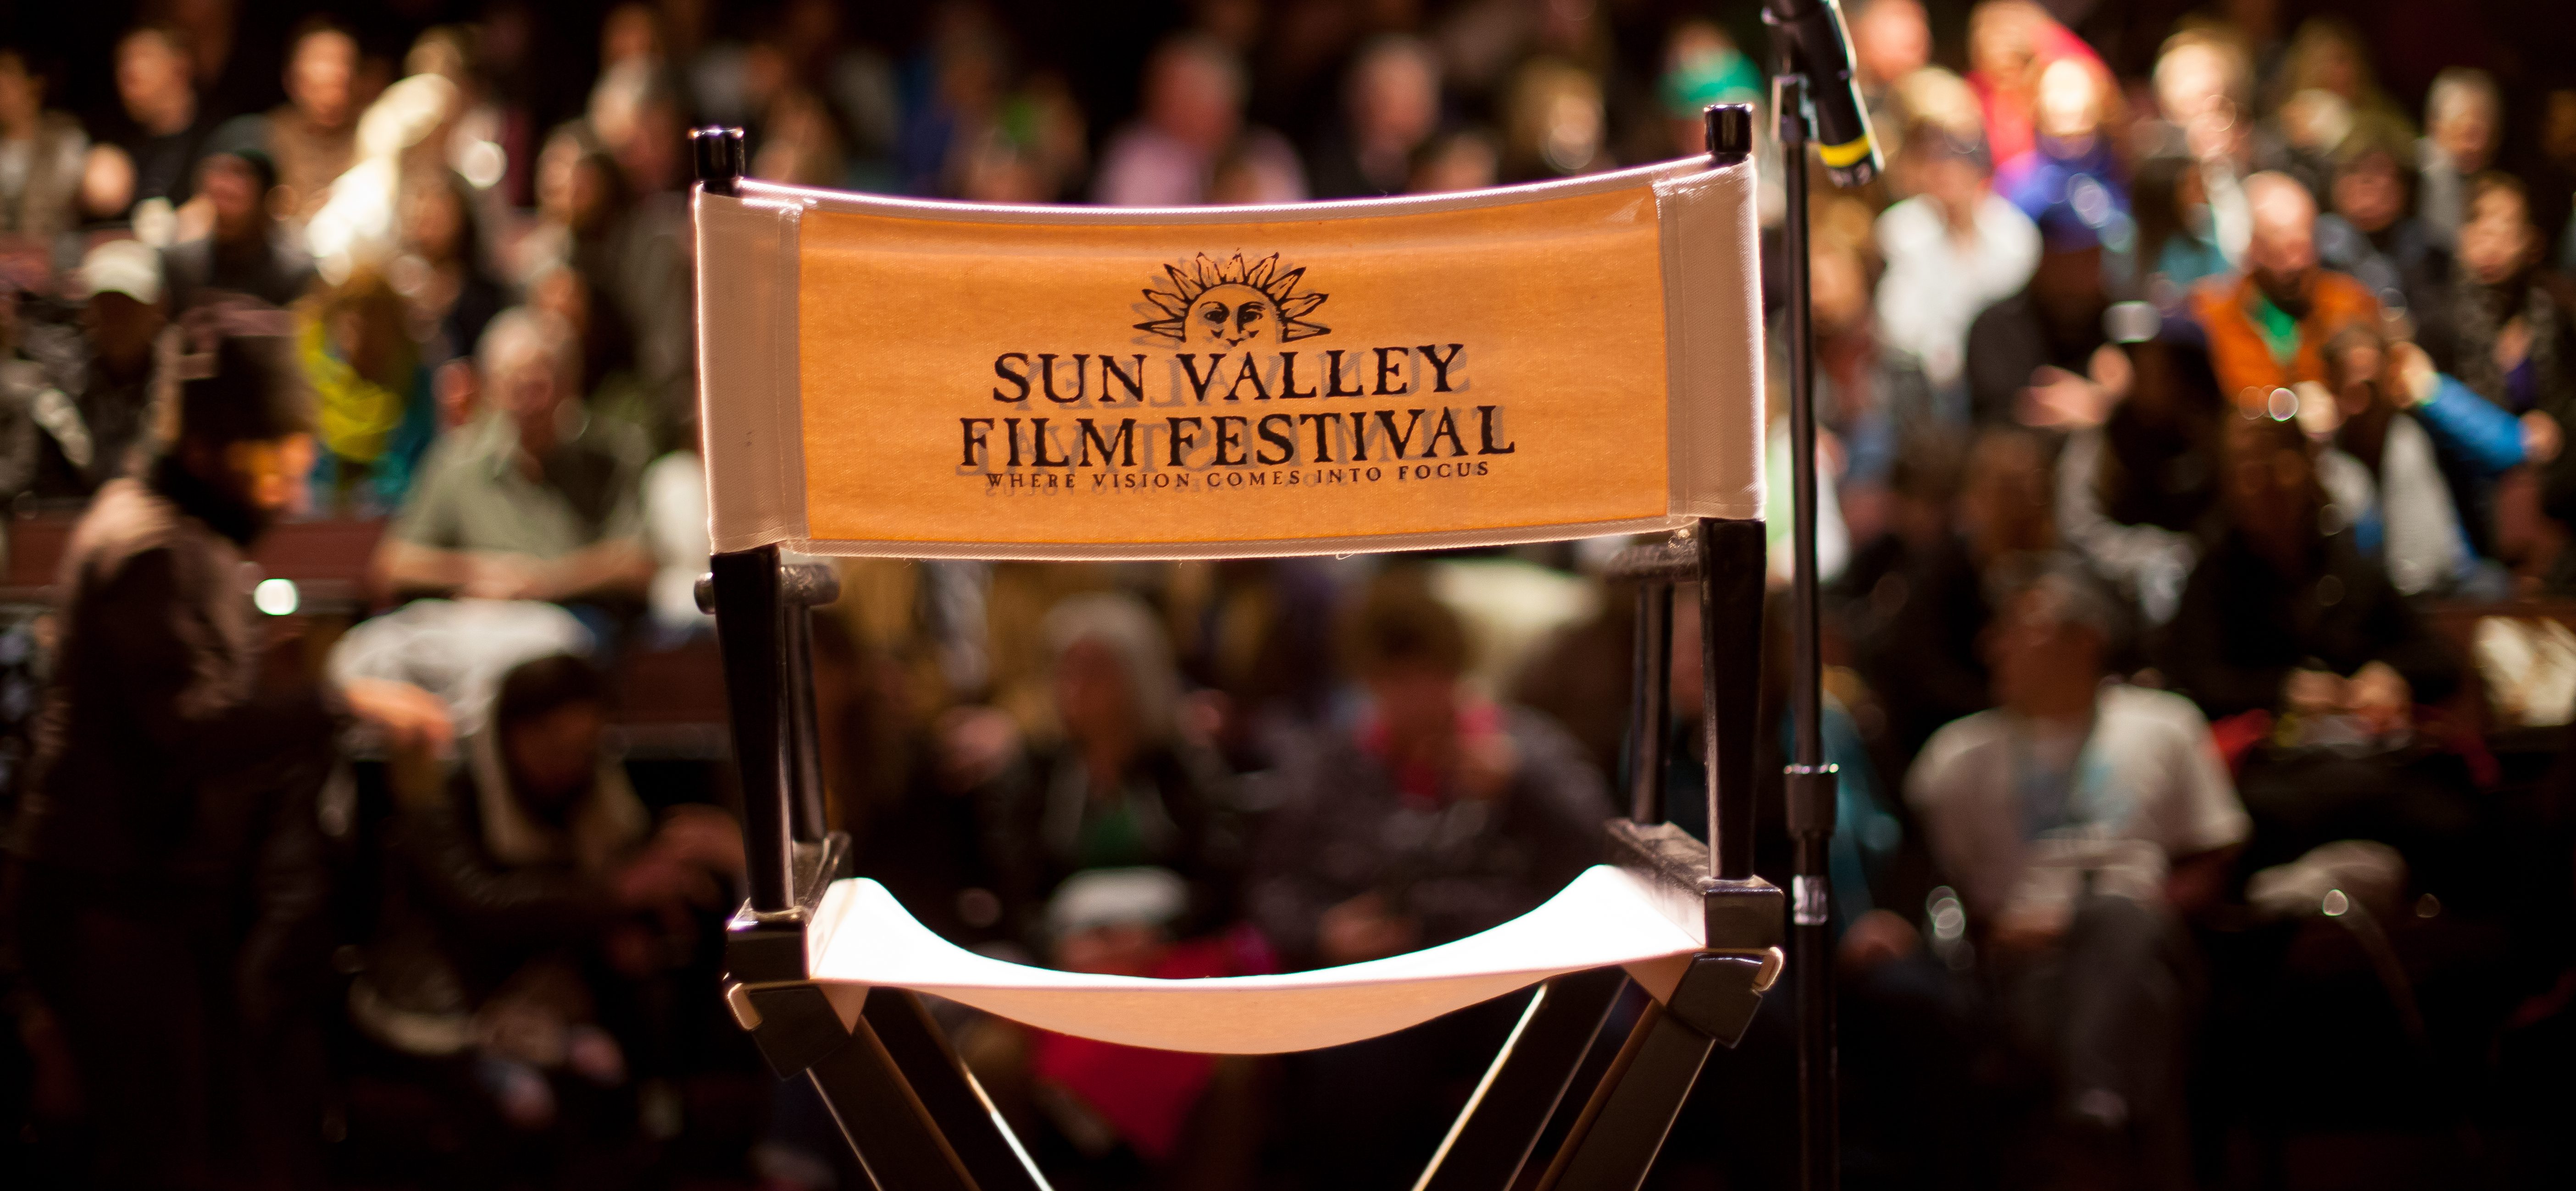 Sun Valley Film Festival - 10th Anniversary! | Visit Sun Valley